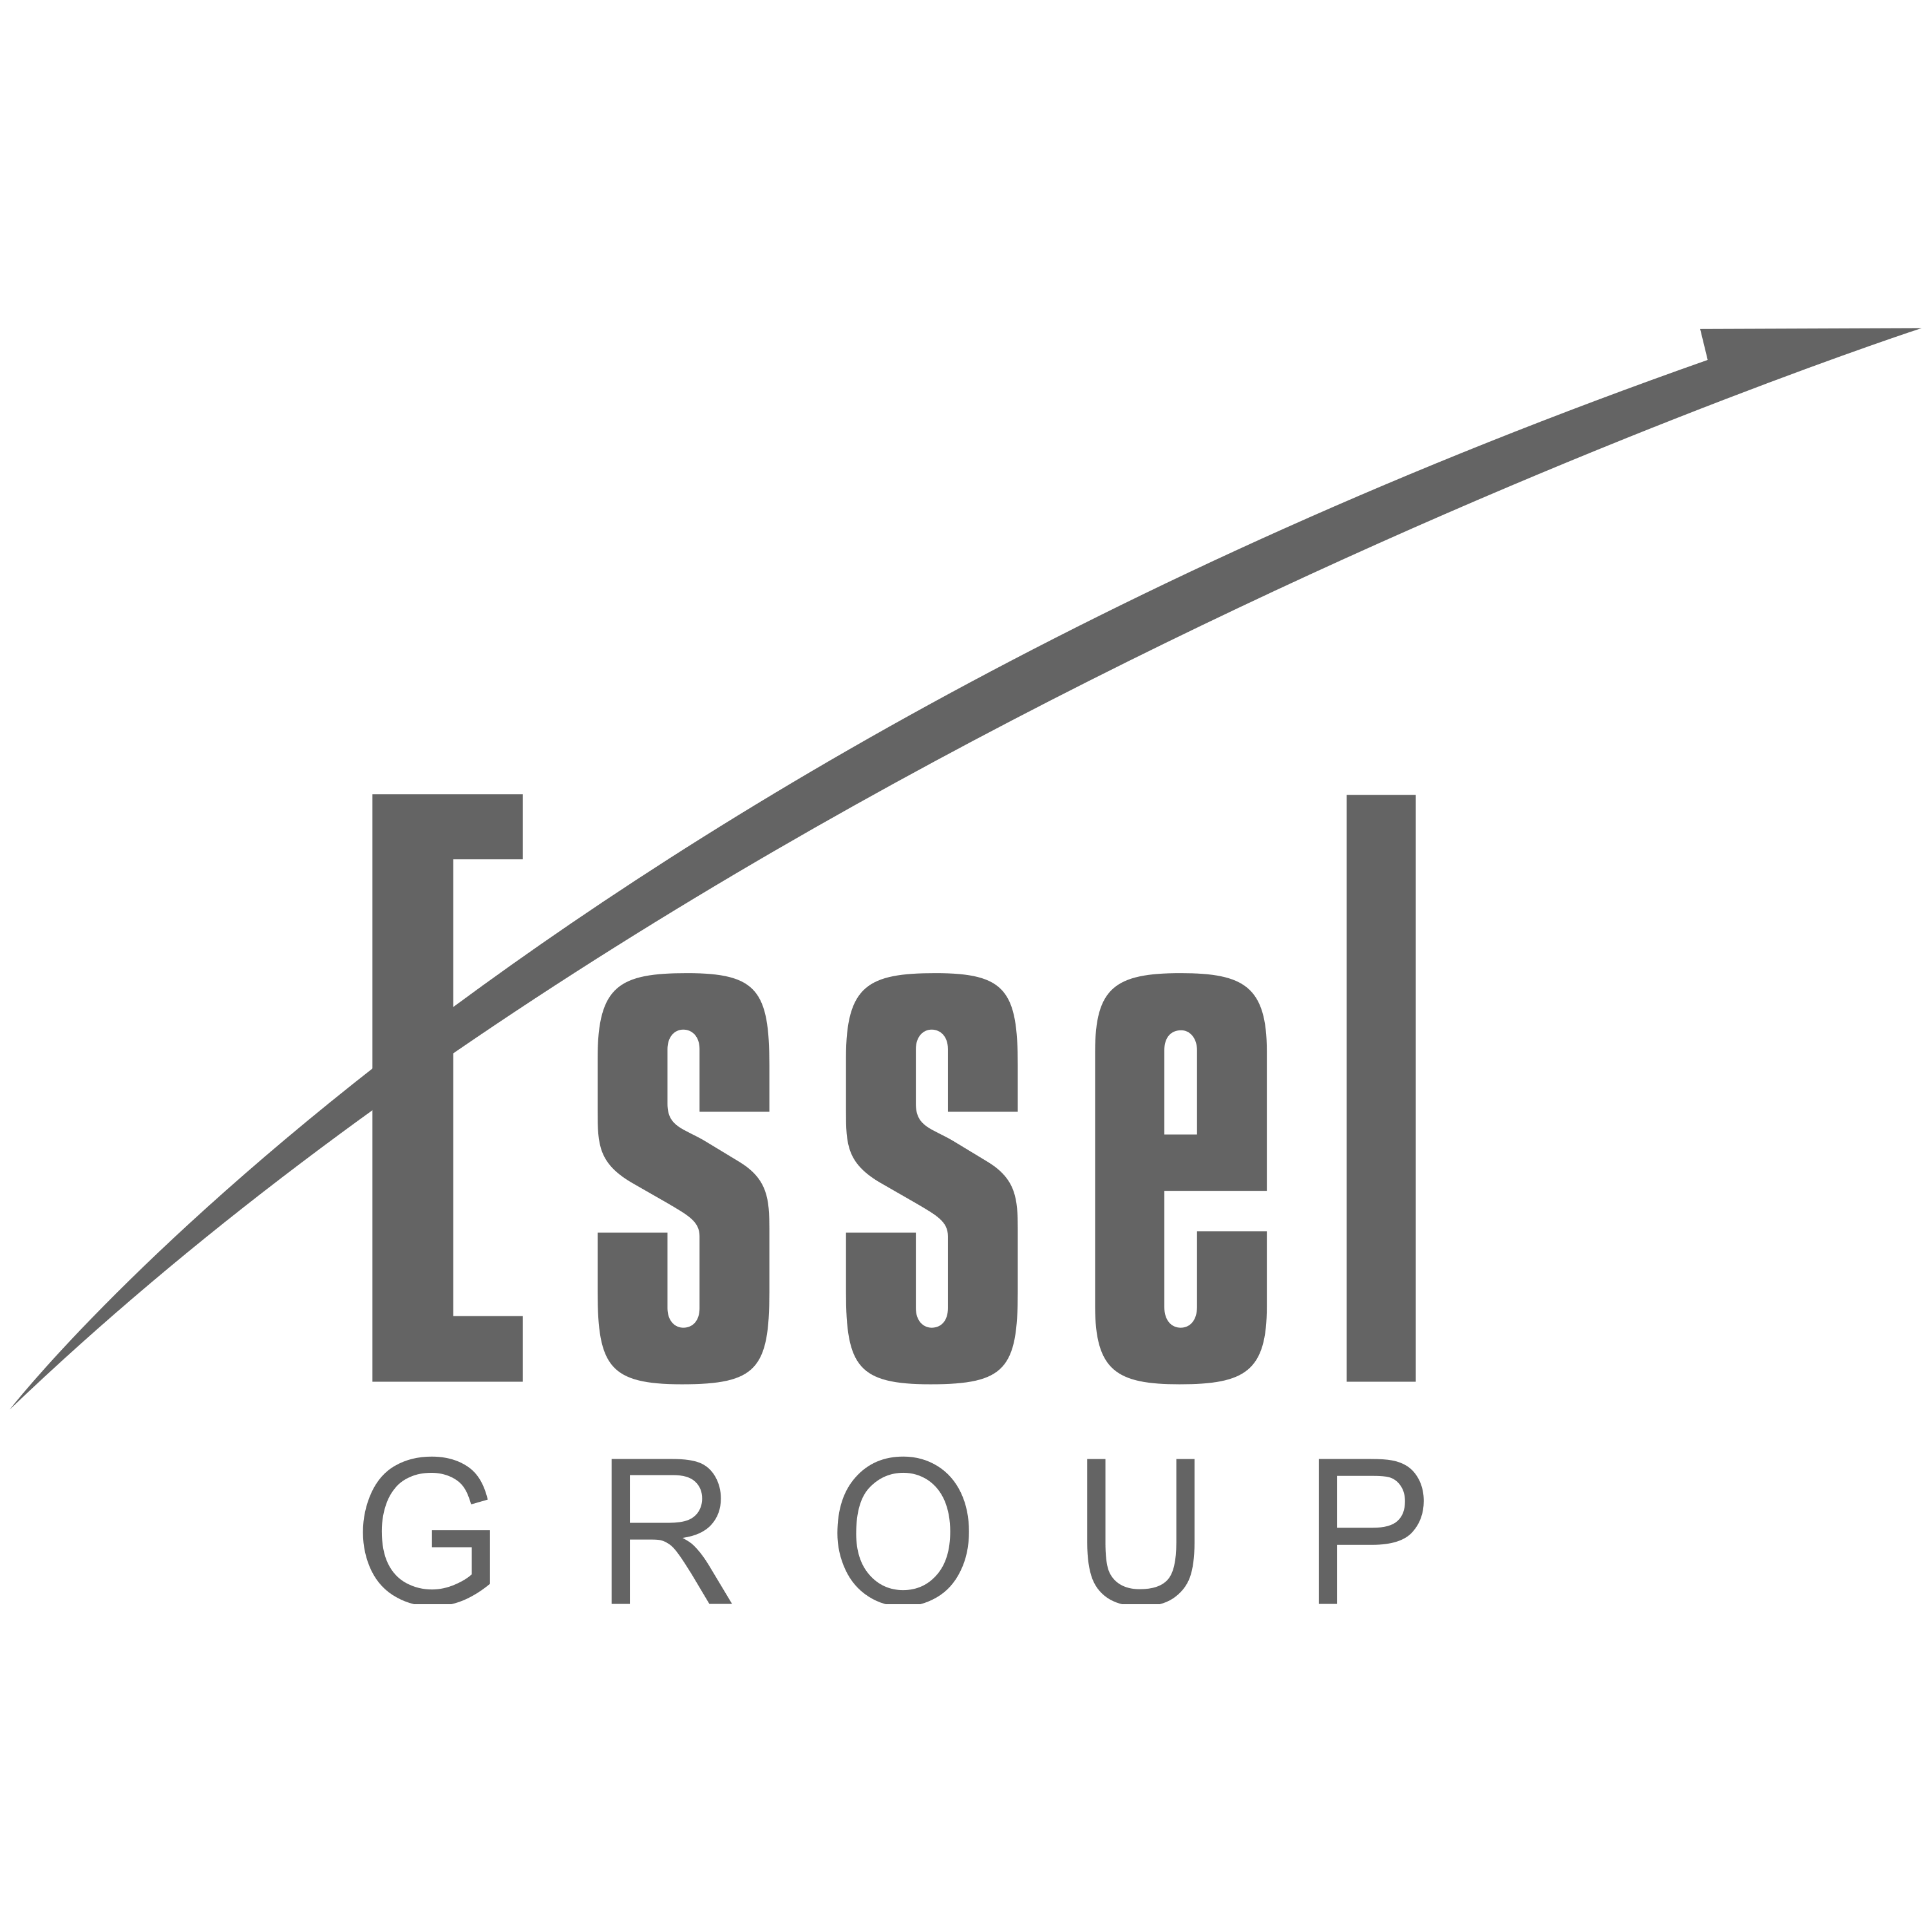 Essel Group Logo Transparent Picture